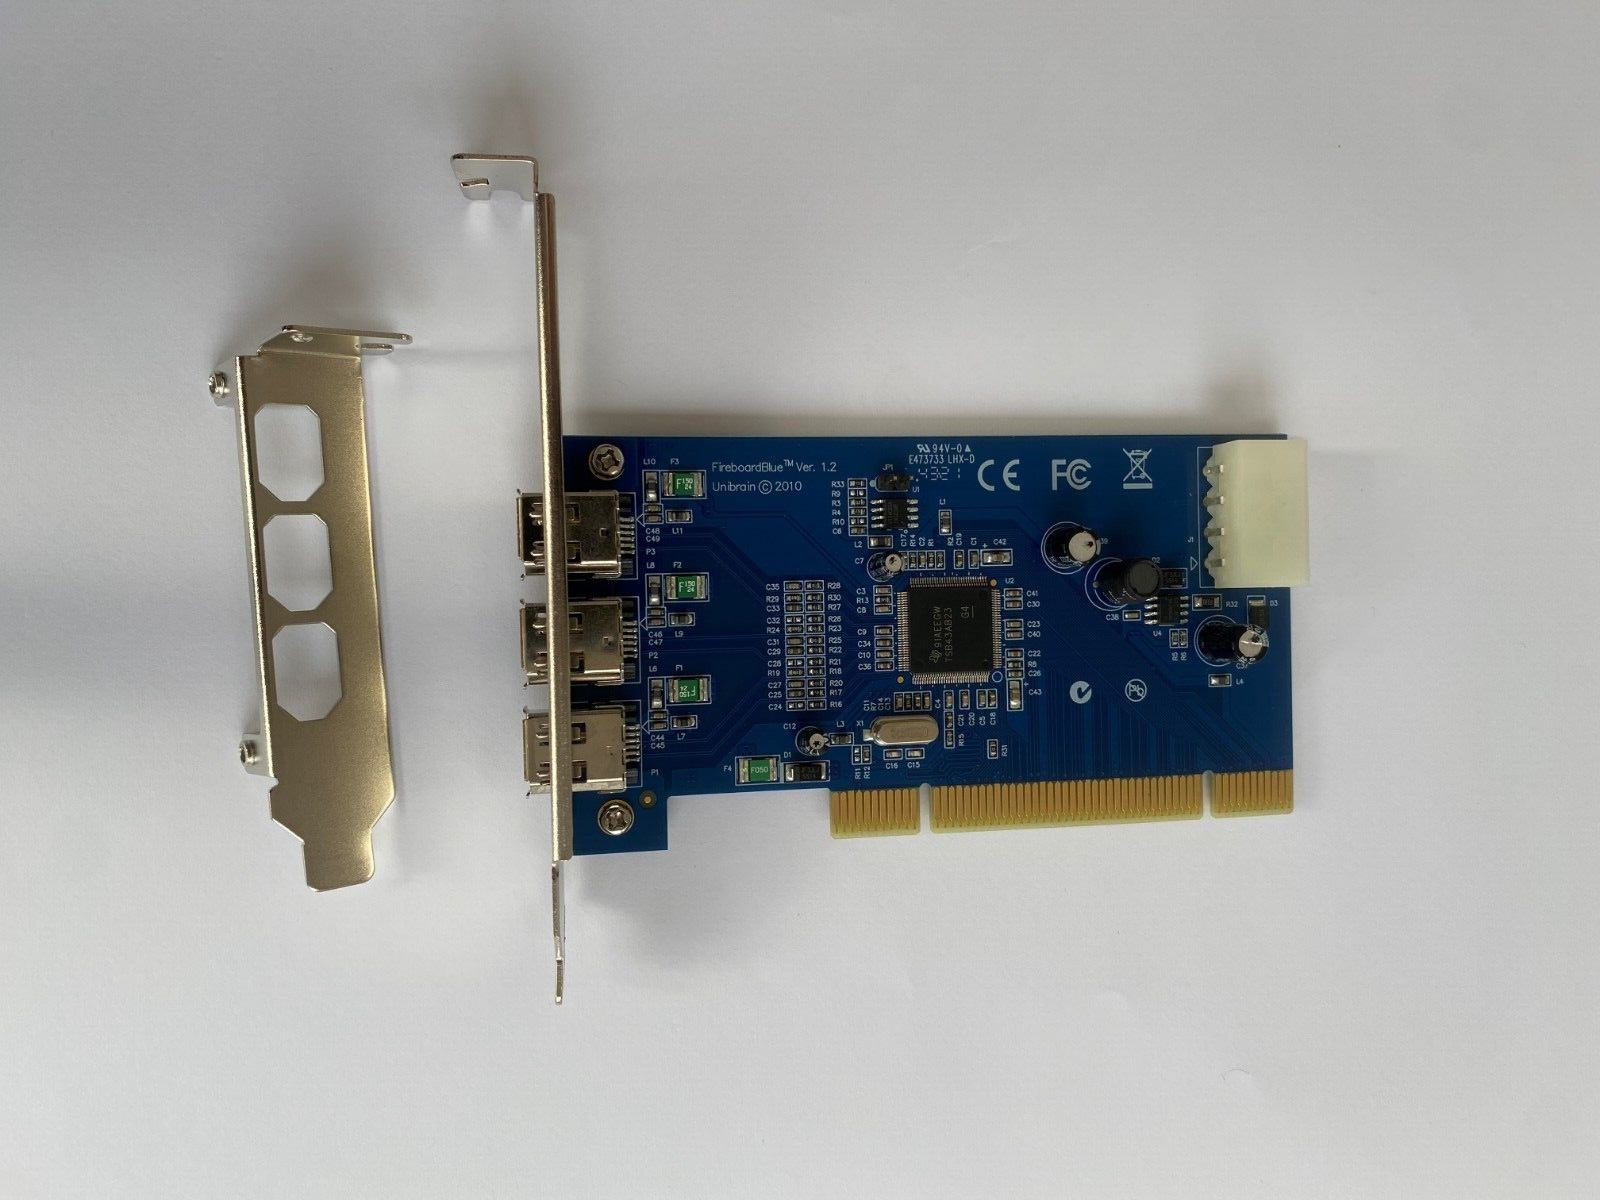 Fireboard-Blue 1394a PCI Firewire adapter, IEEE-1394